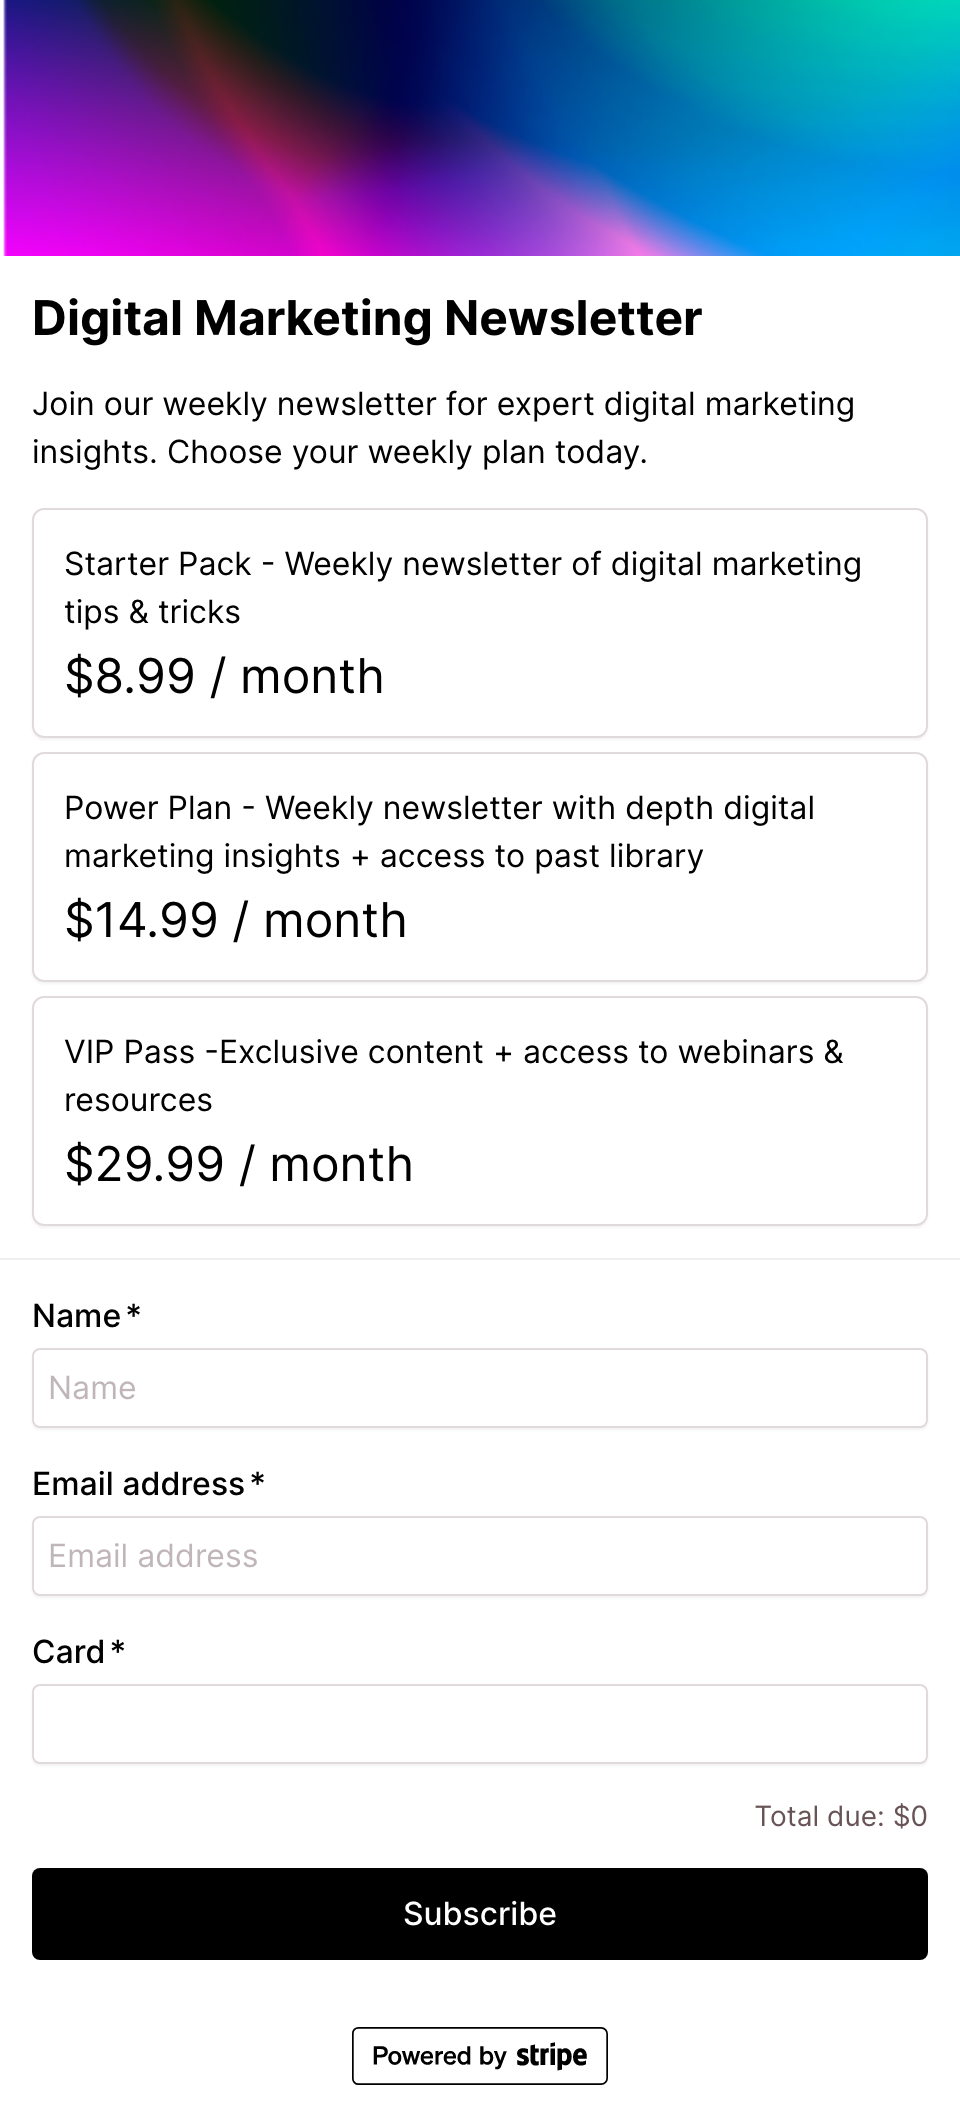 Online newsletter - tiered pricing